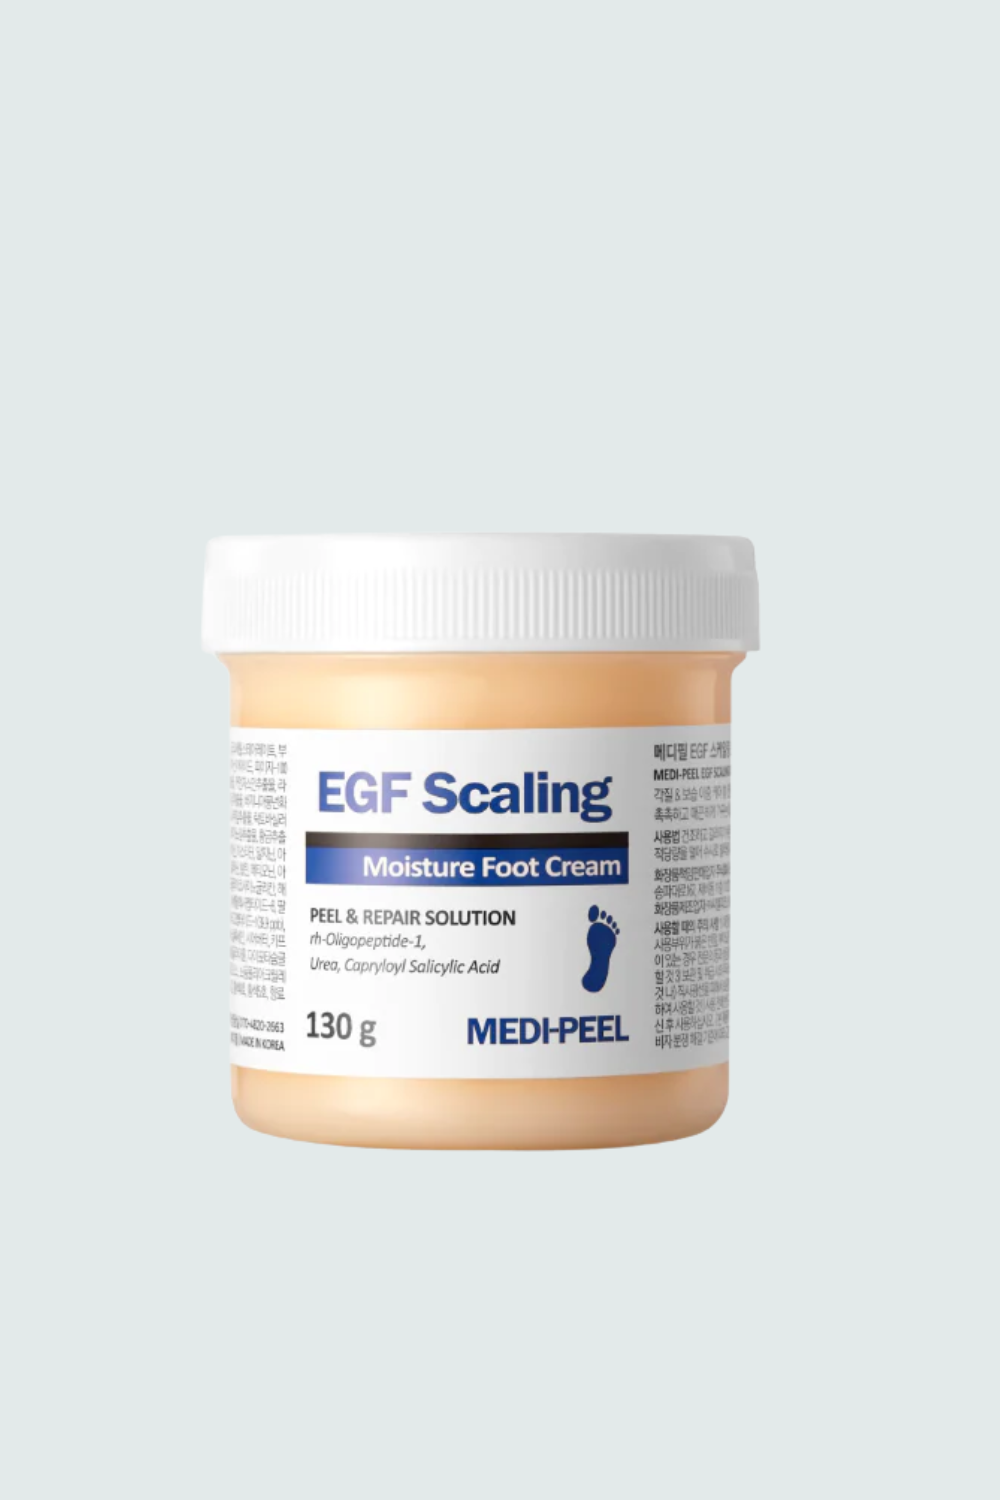 EGF Scaling Moisture Foot Cream 130g MEDI-PEEL